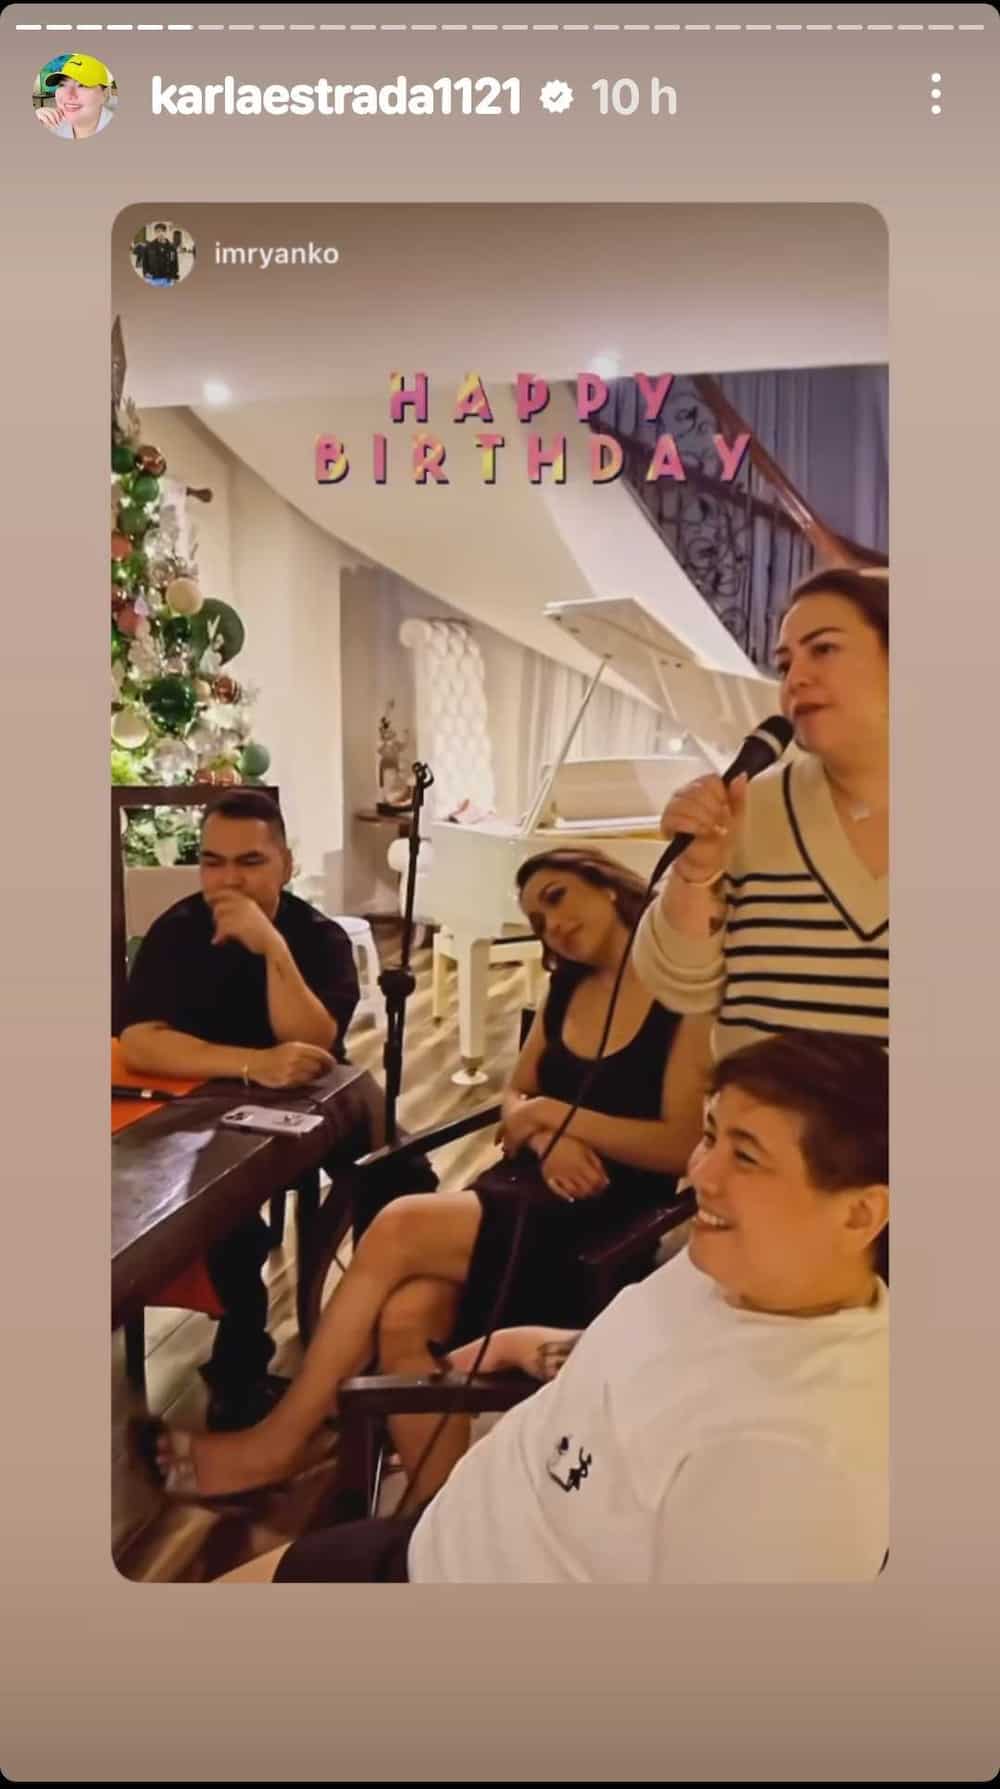 Karla Estrada, ilang pasilip sa birthday celebration niya kasama ang mga mahal sa buhay, viral